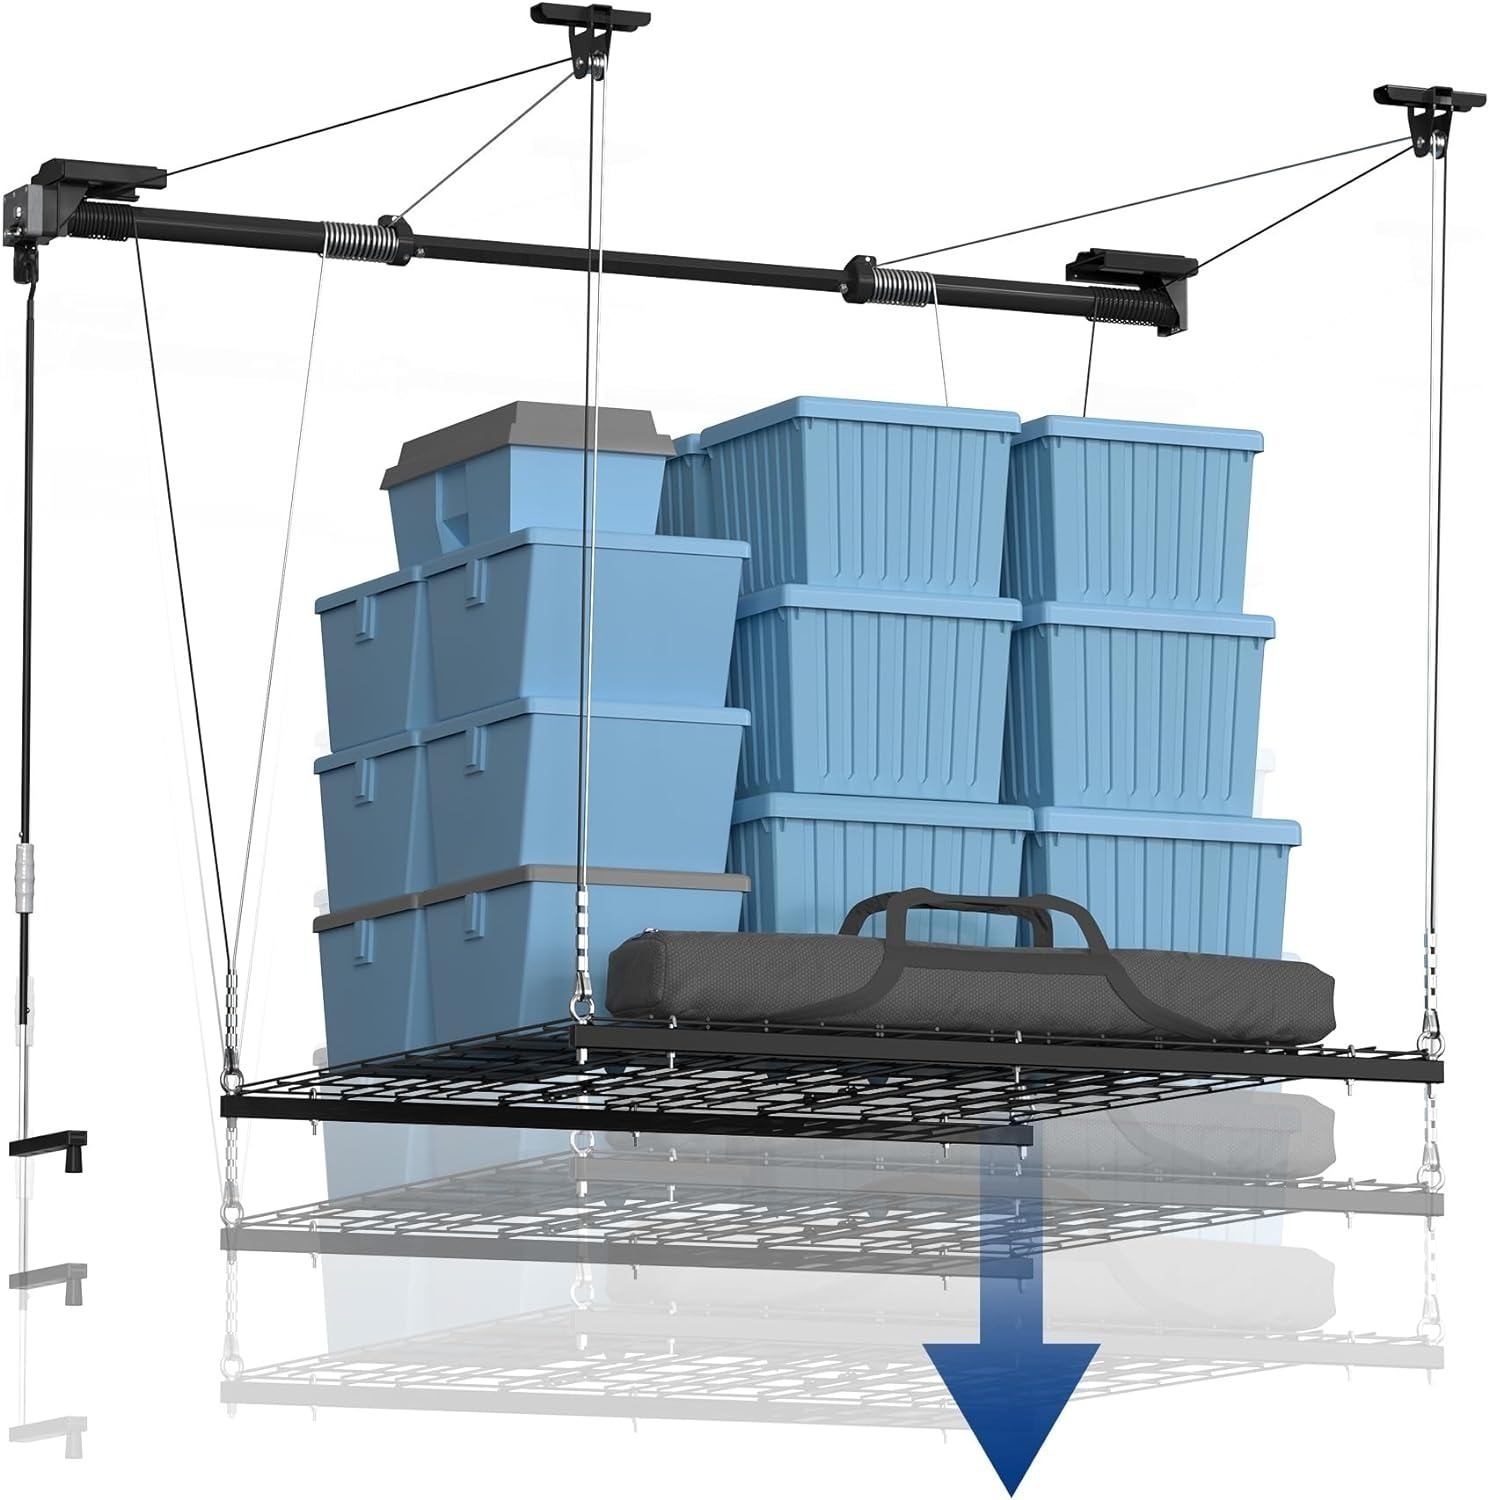 FLEXIMOUNTS 4'x4' GL1 Adjustable Overhead Garage Lifting Storage Rack System (300lbs) $208 + Free Shipping